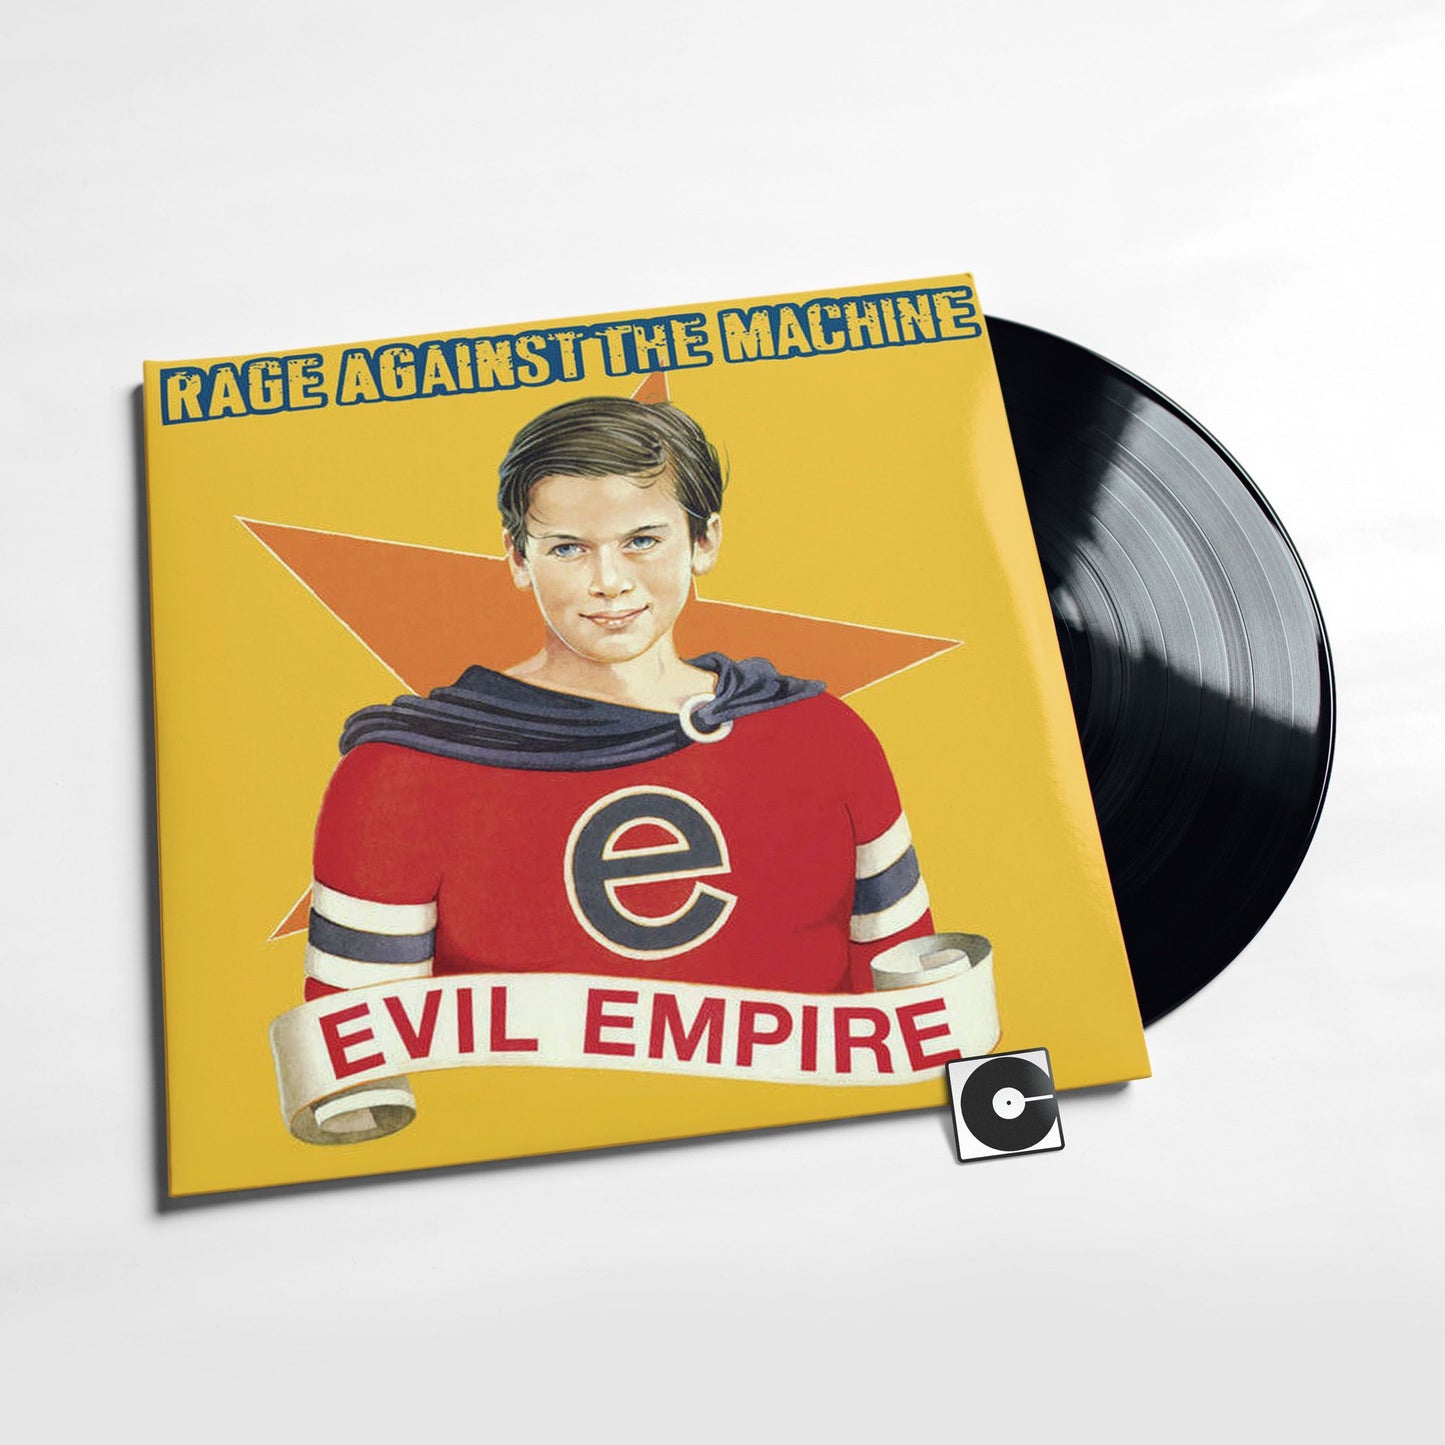 Rage Against The Machine - "Evil Empire"